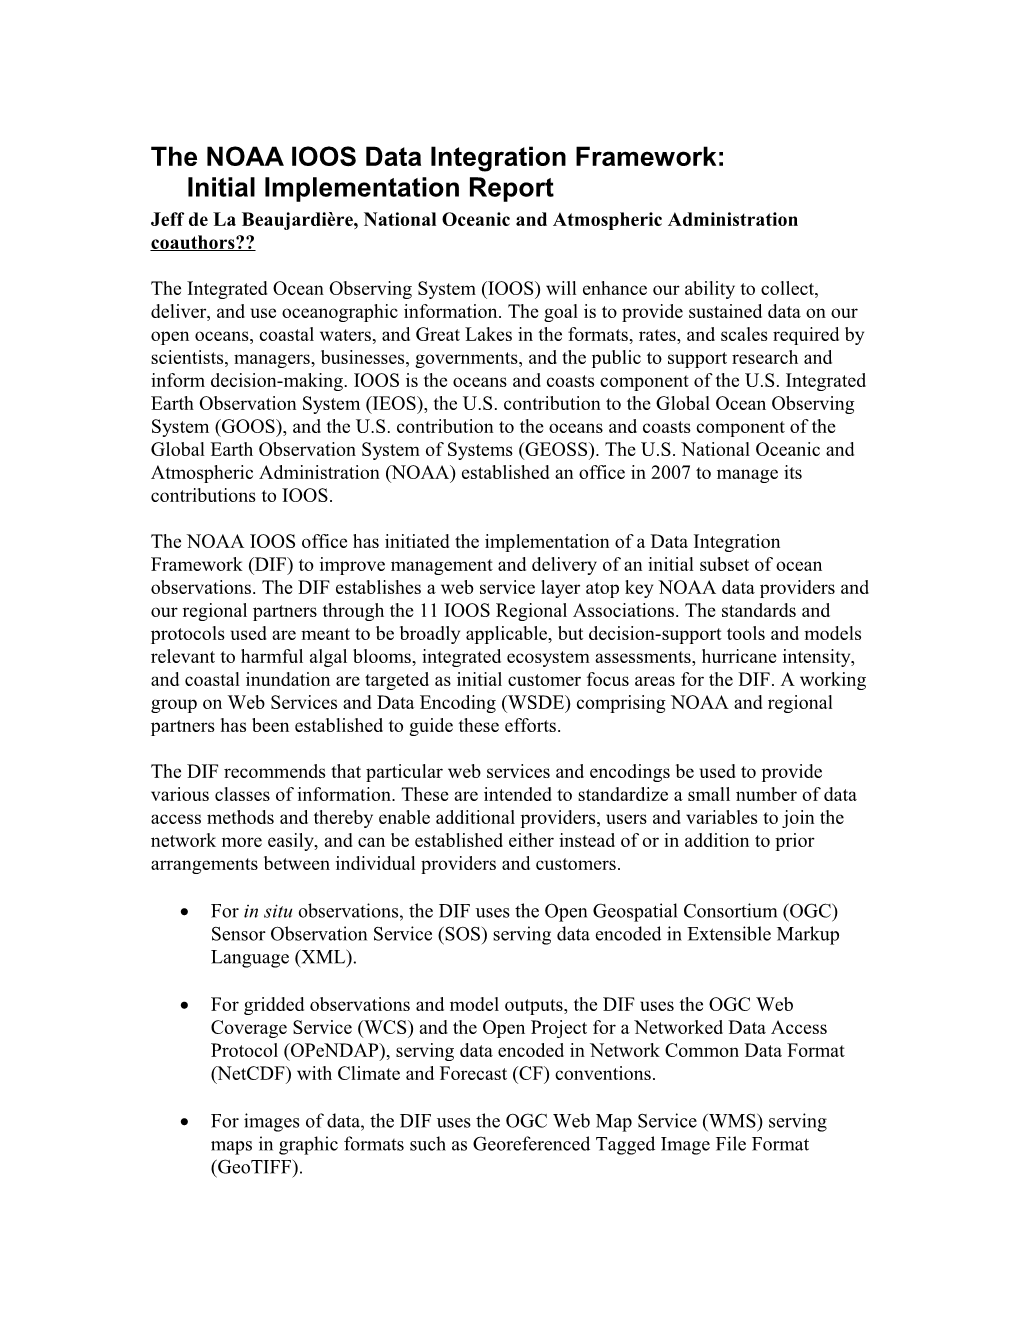 NOAA IOOS Data Integration Framework: Initial Implementation Report